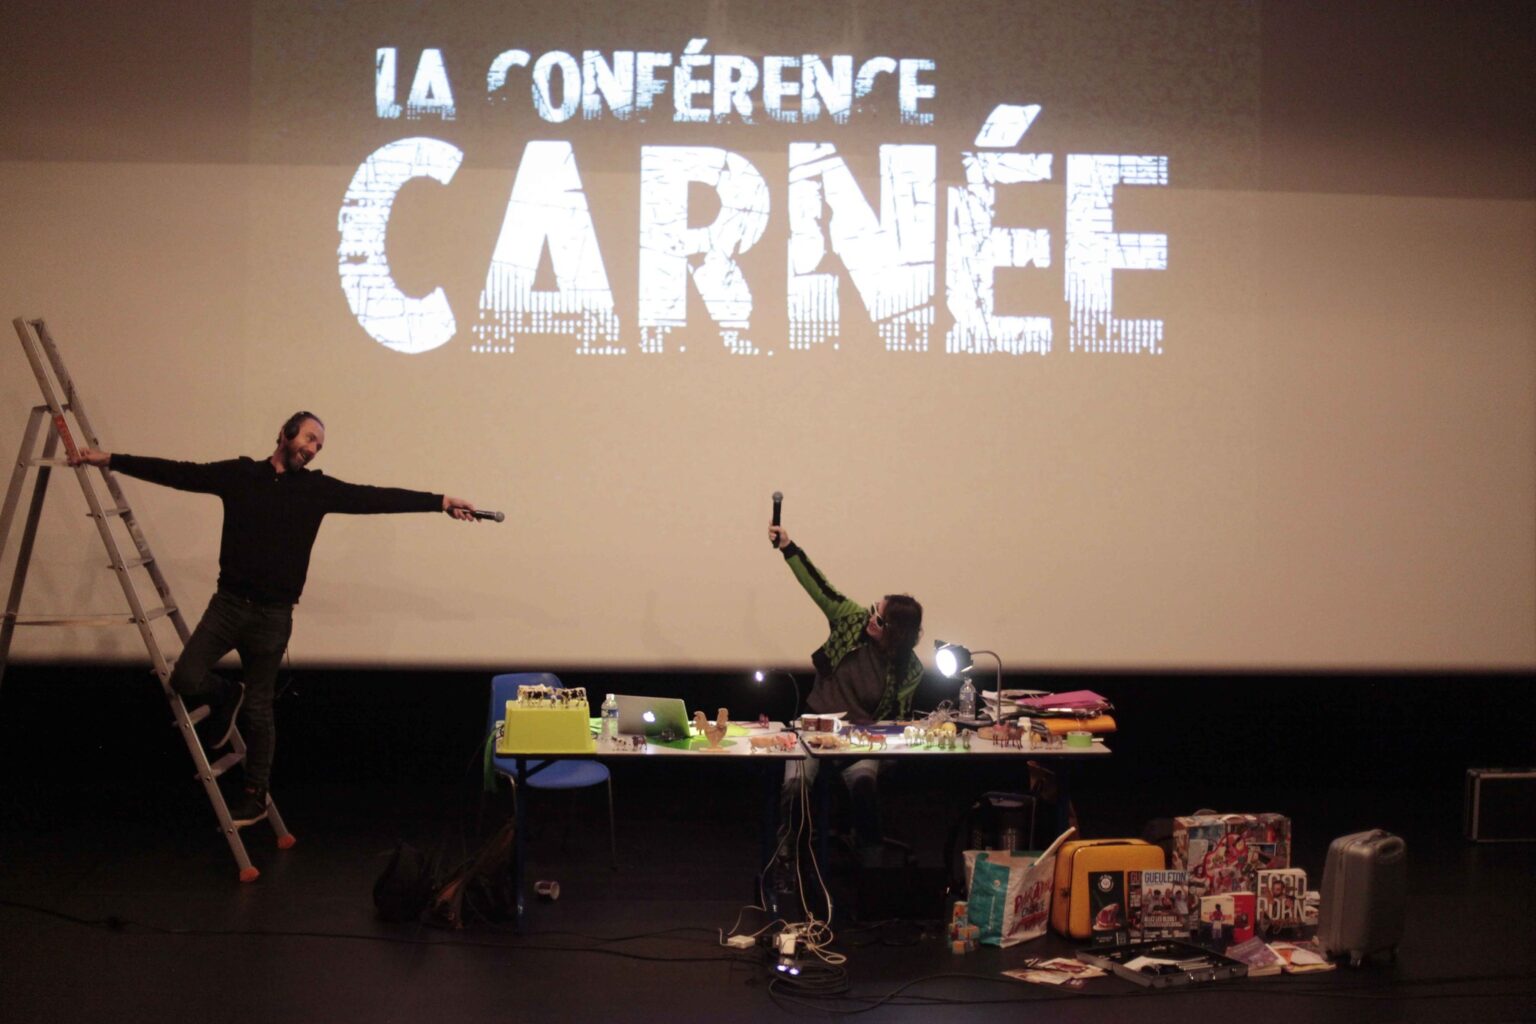 La Conference Carnee 4 1536x1024